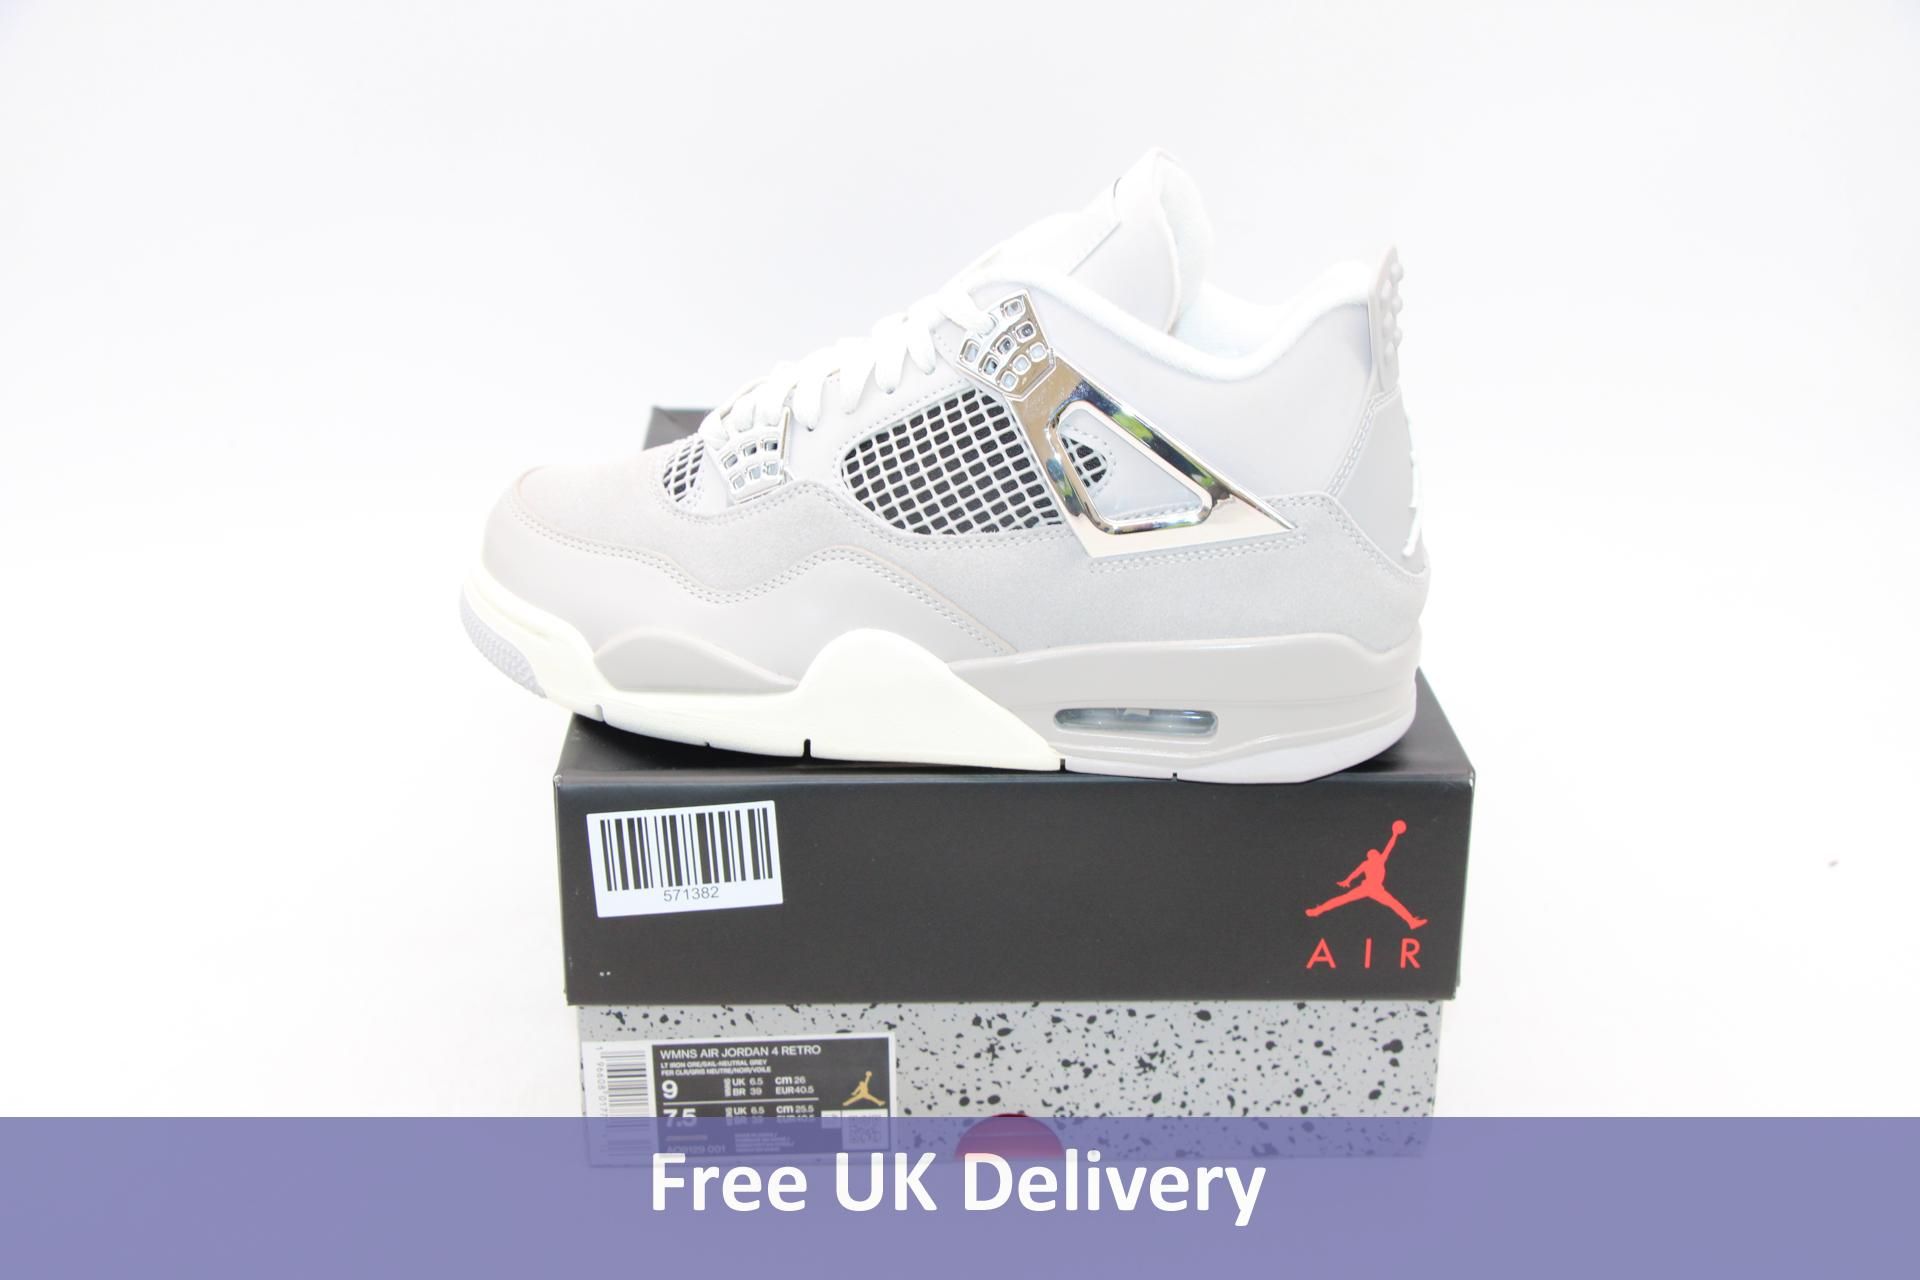 Nike Air Jordan 4 Retro Frozen Moments Trainers, Grey/White/Silver, Size UK 6.5